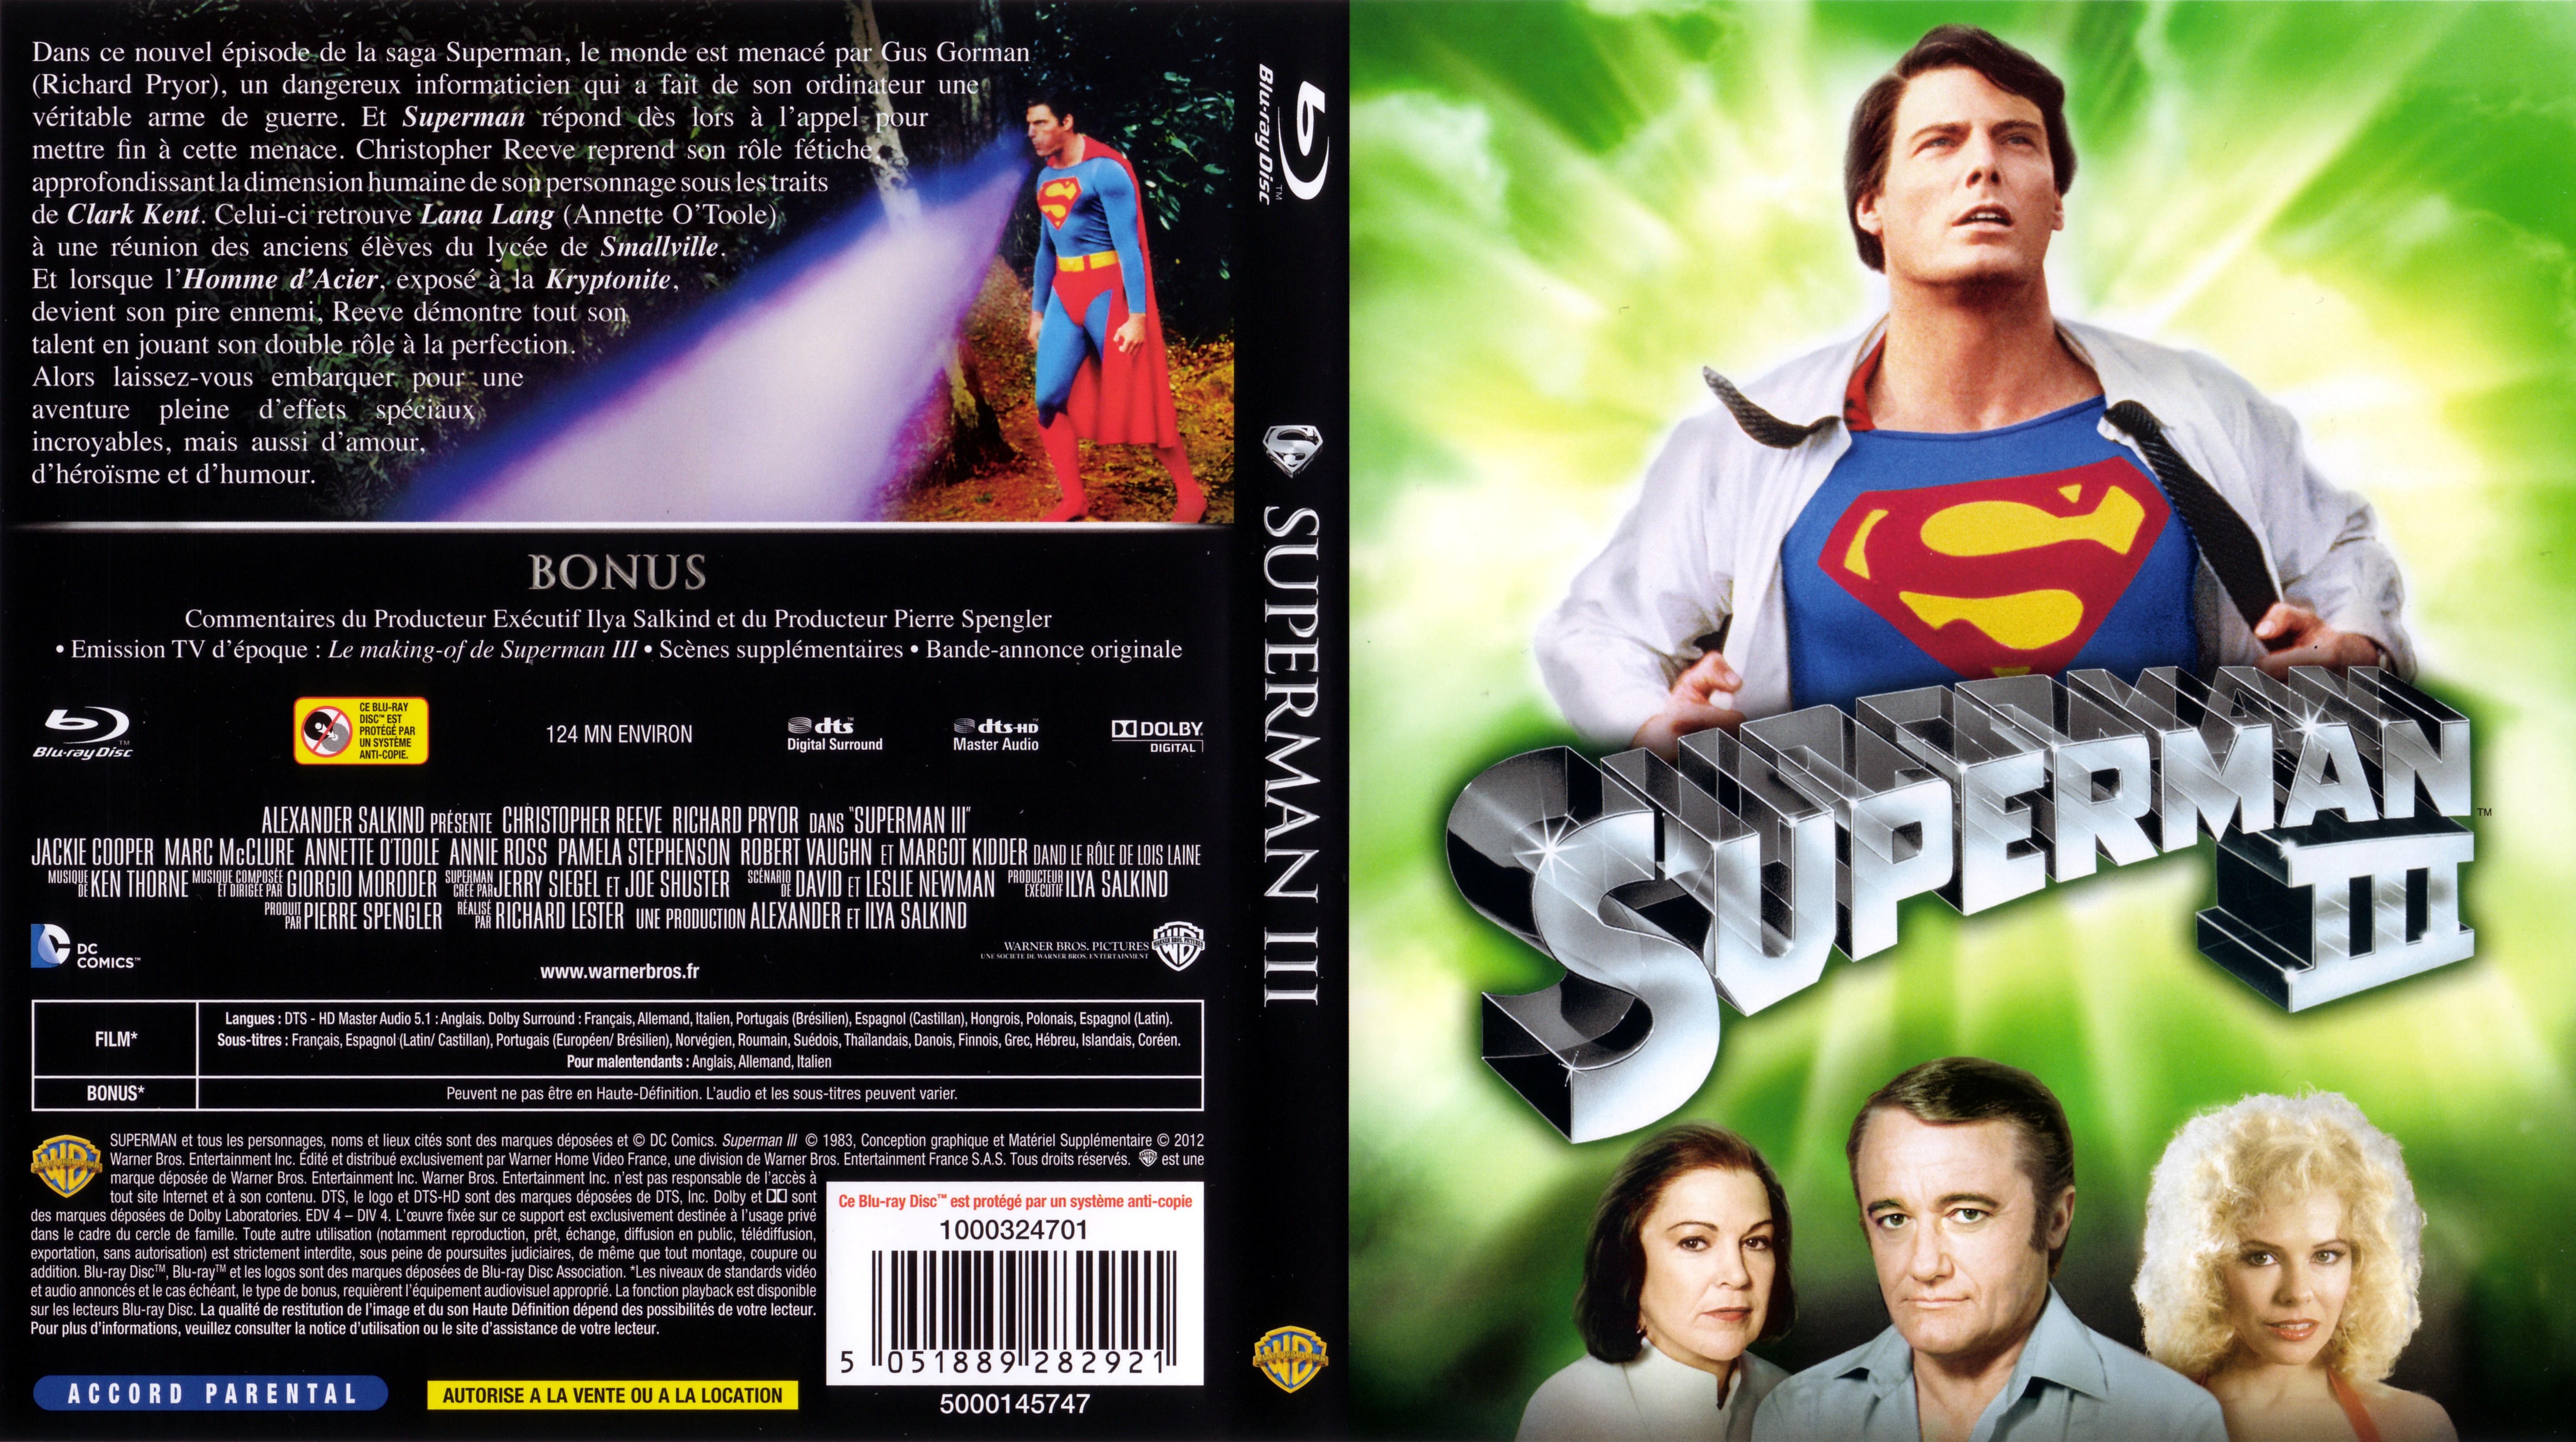 Jaquette DVD Superman 3 (BLU-RAY)